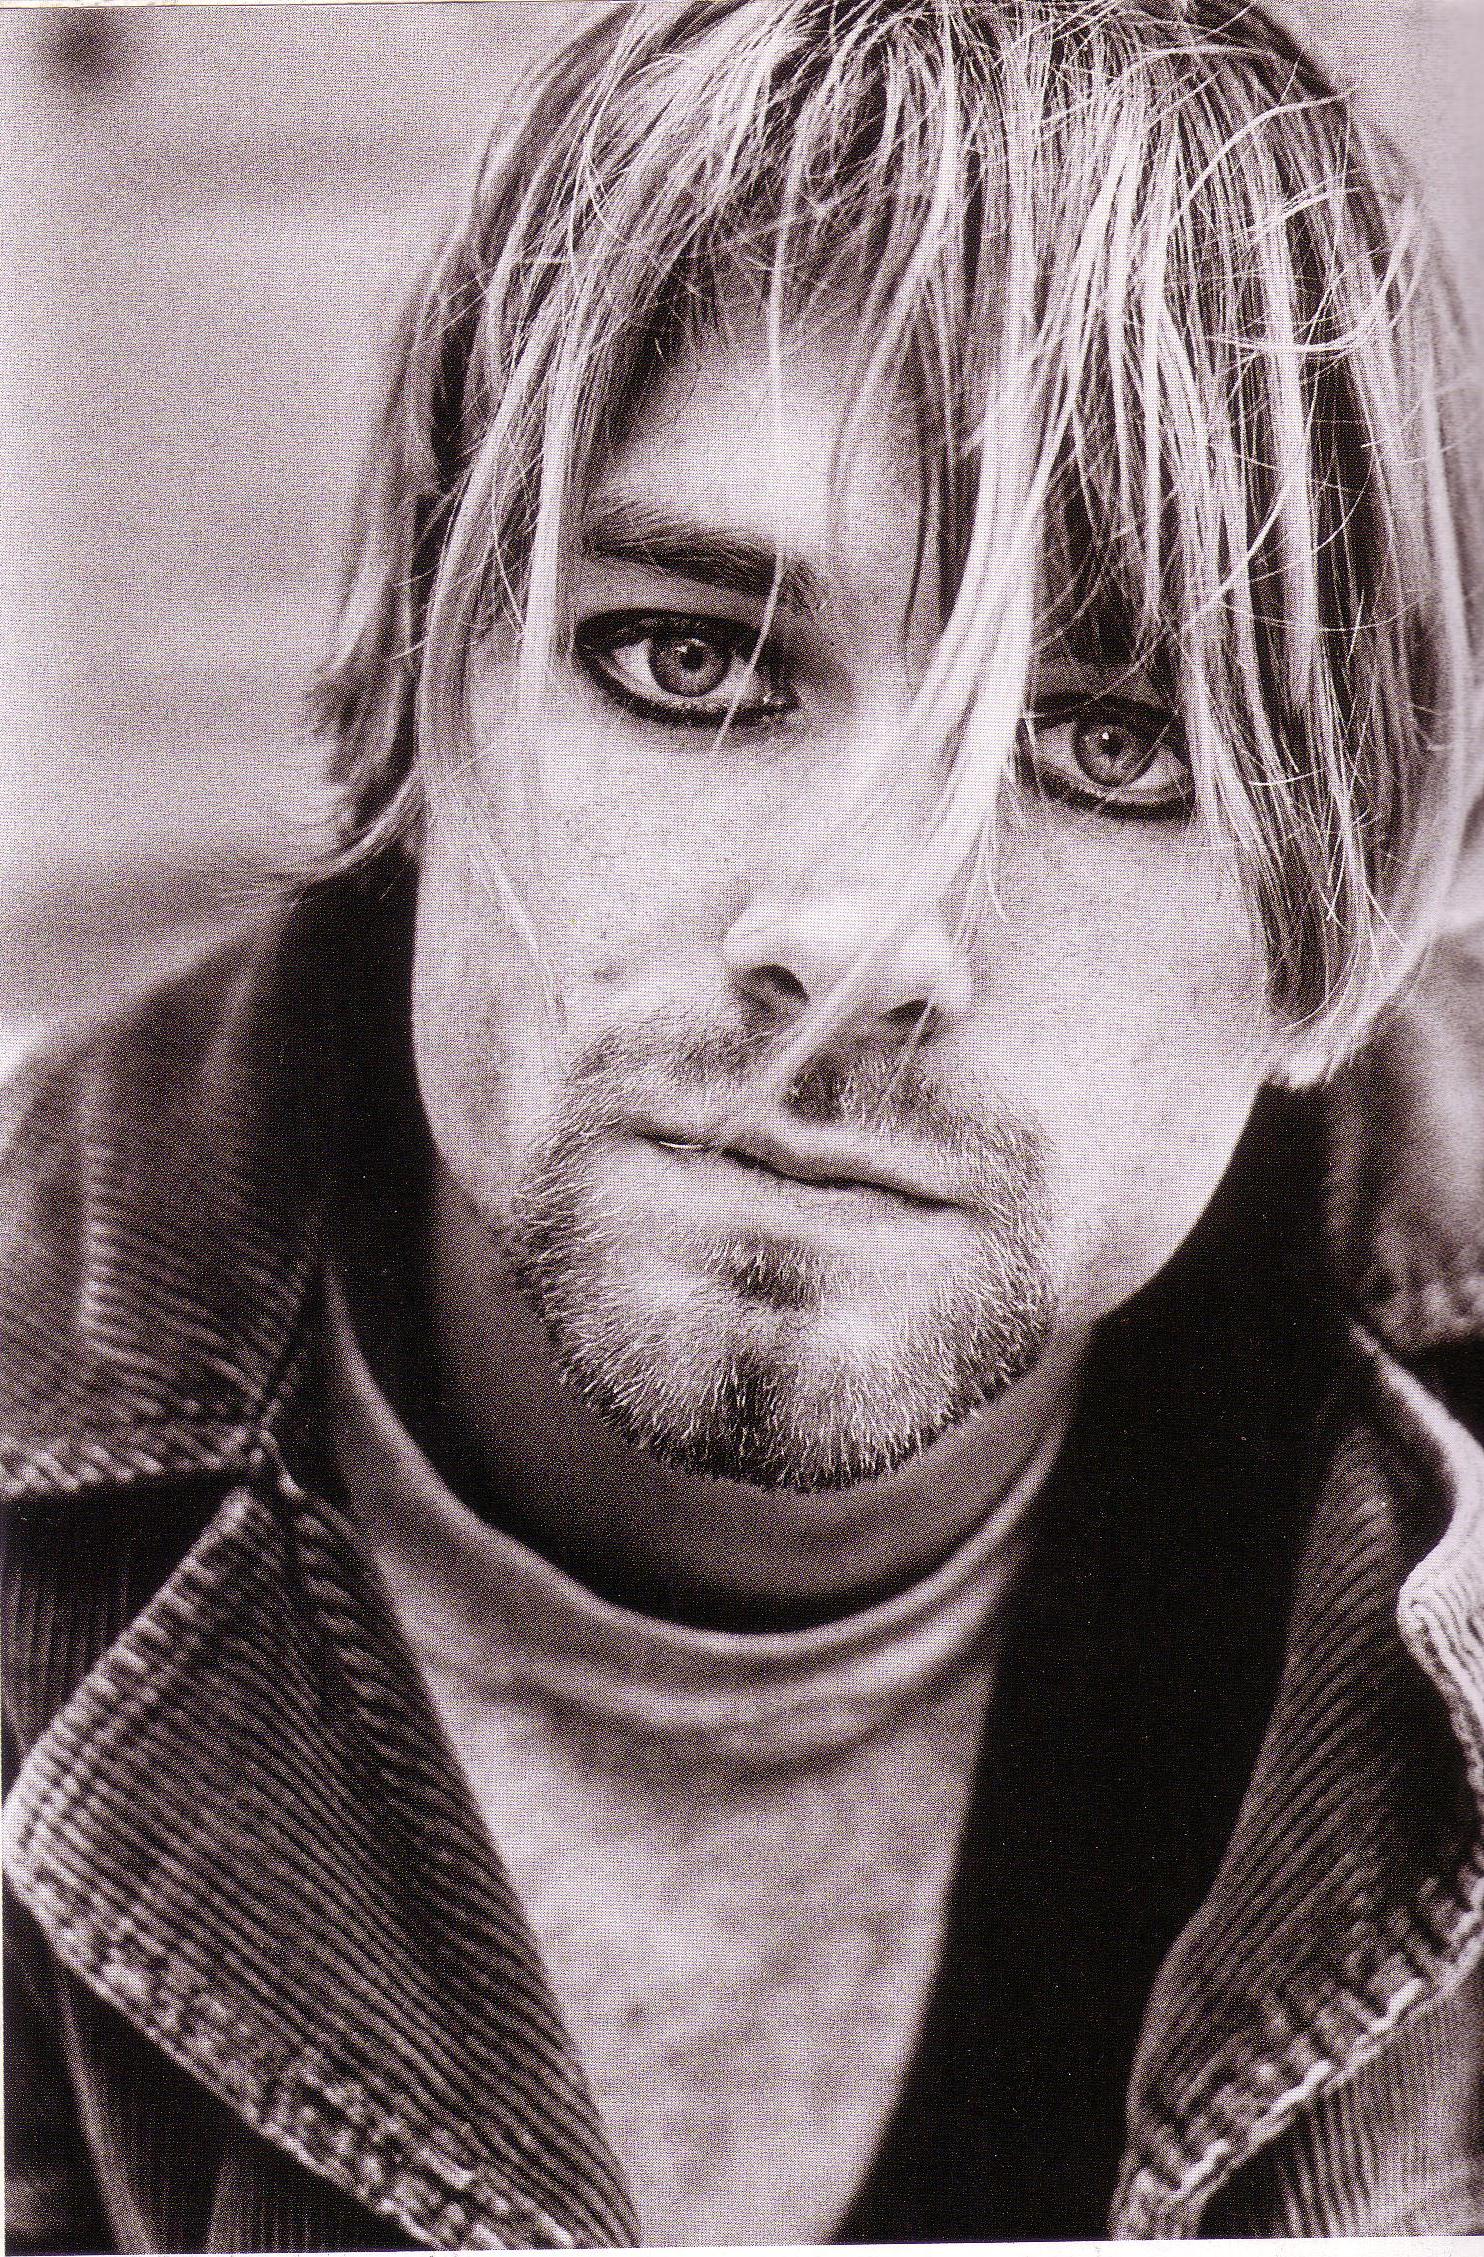 Kurt Cobain photo 22 of 83 pics, wallpaper - photo #201841 - ThePlace2